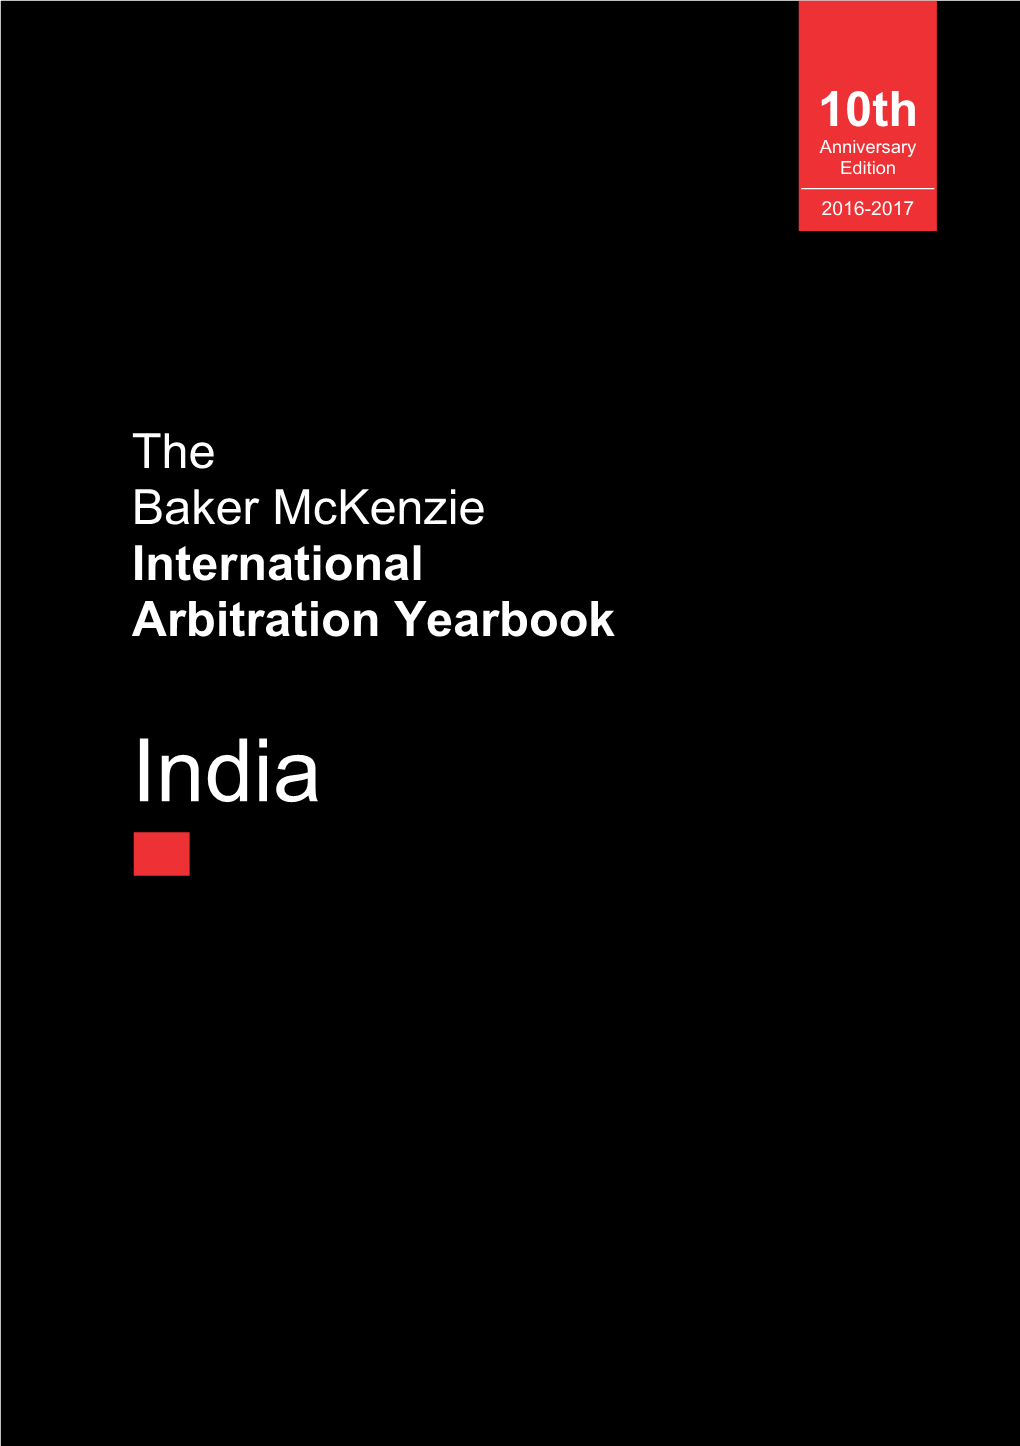 India 2017 Arbitration Yearbook | India